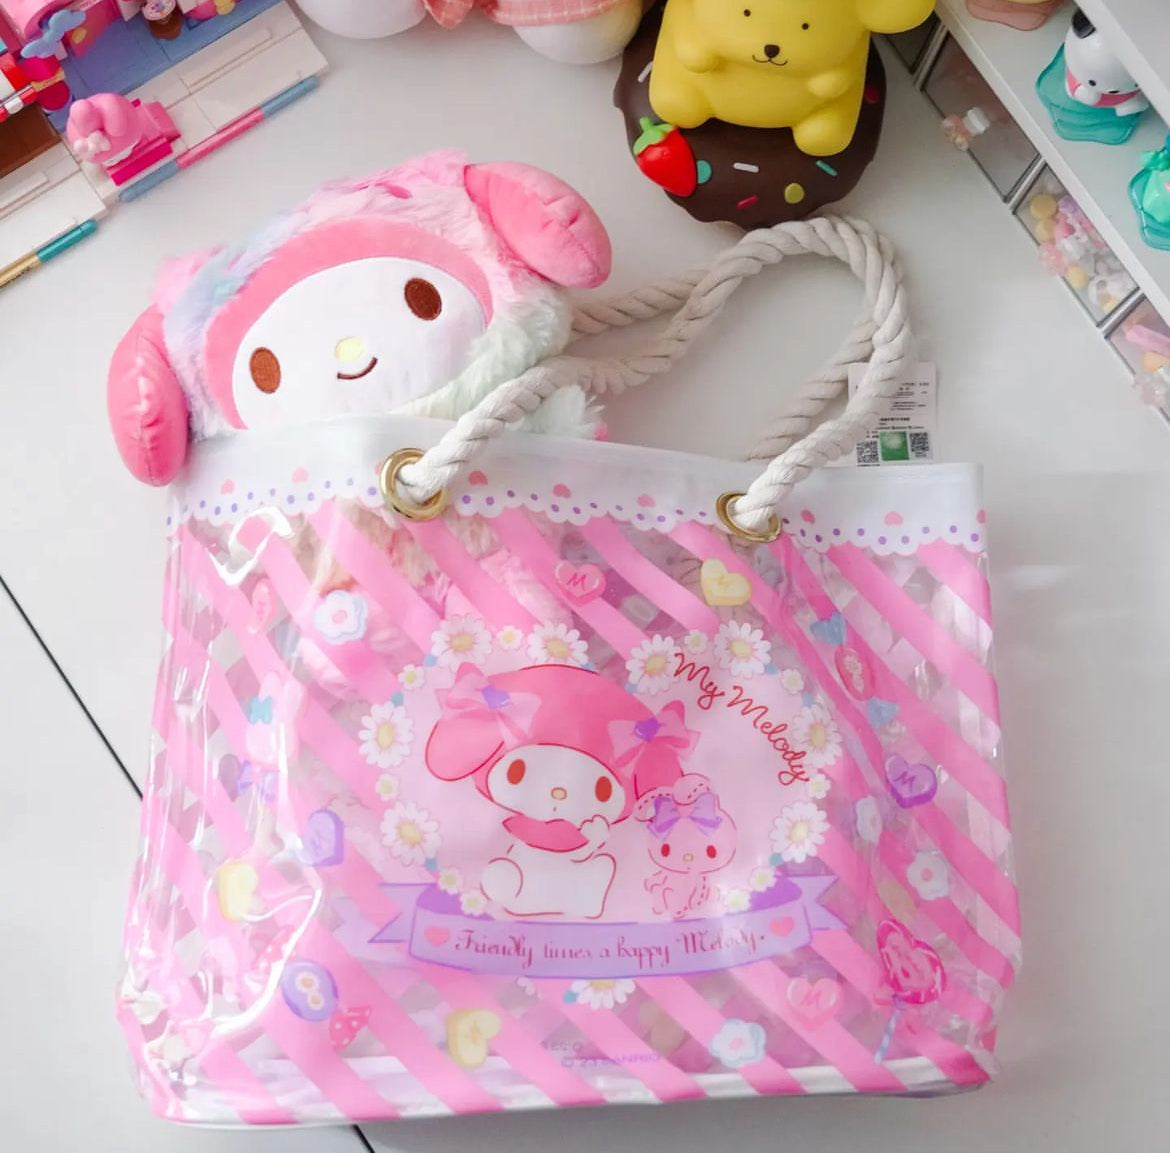 Sanrio Official Jelly Shoulder Bag